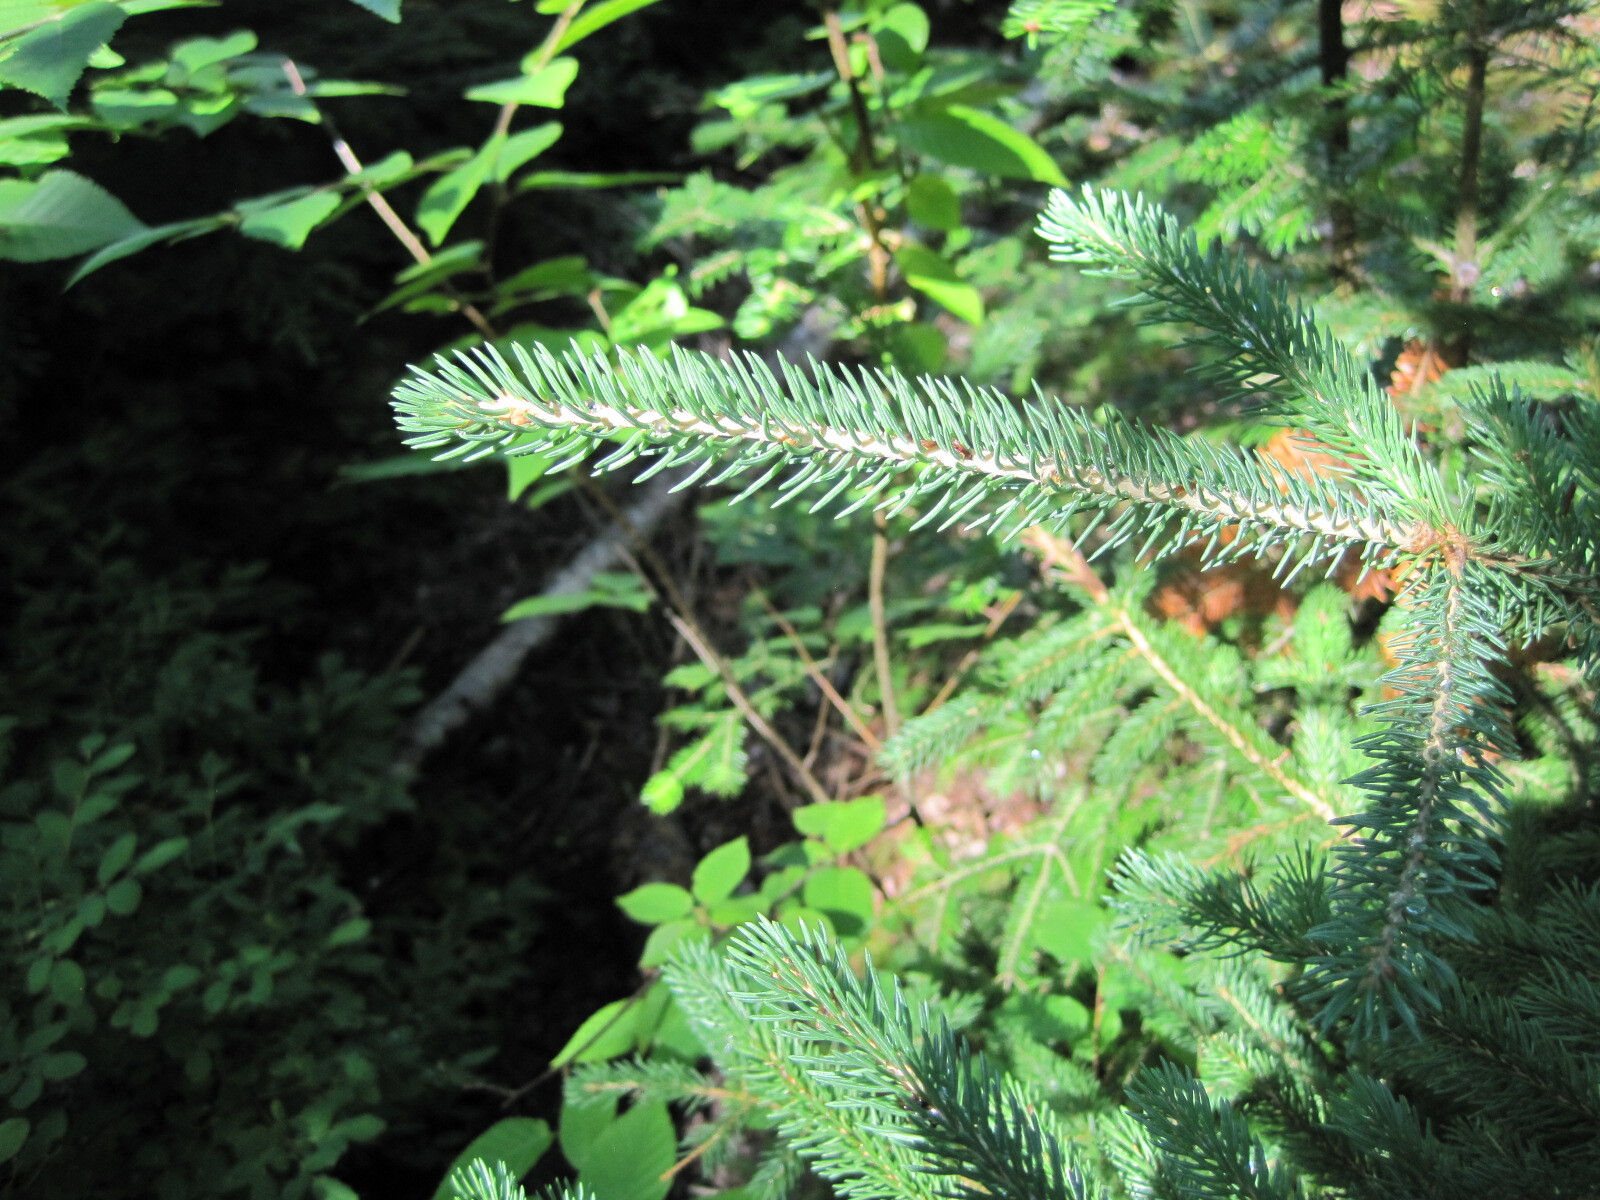 Black Spruce Needles are like a bottle brush